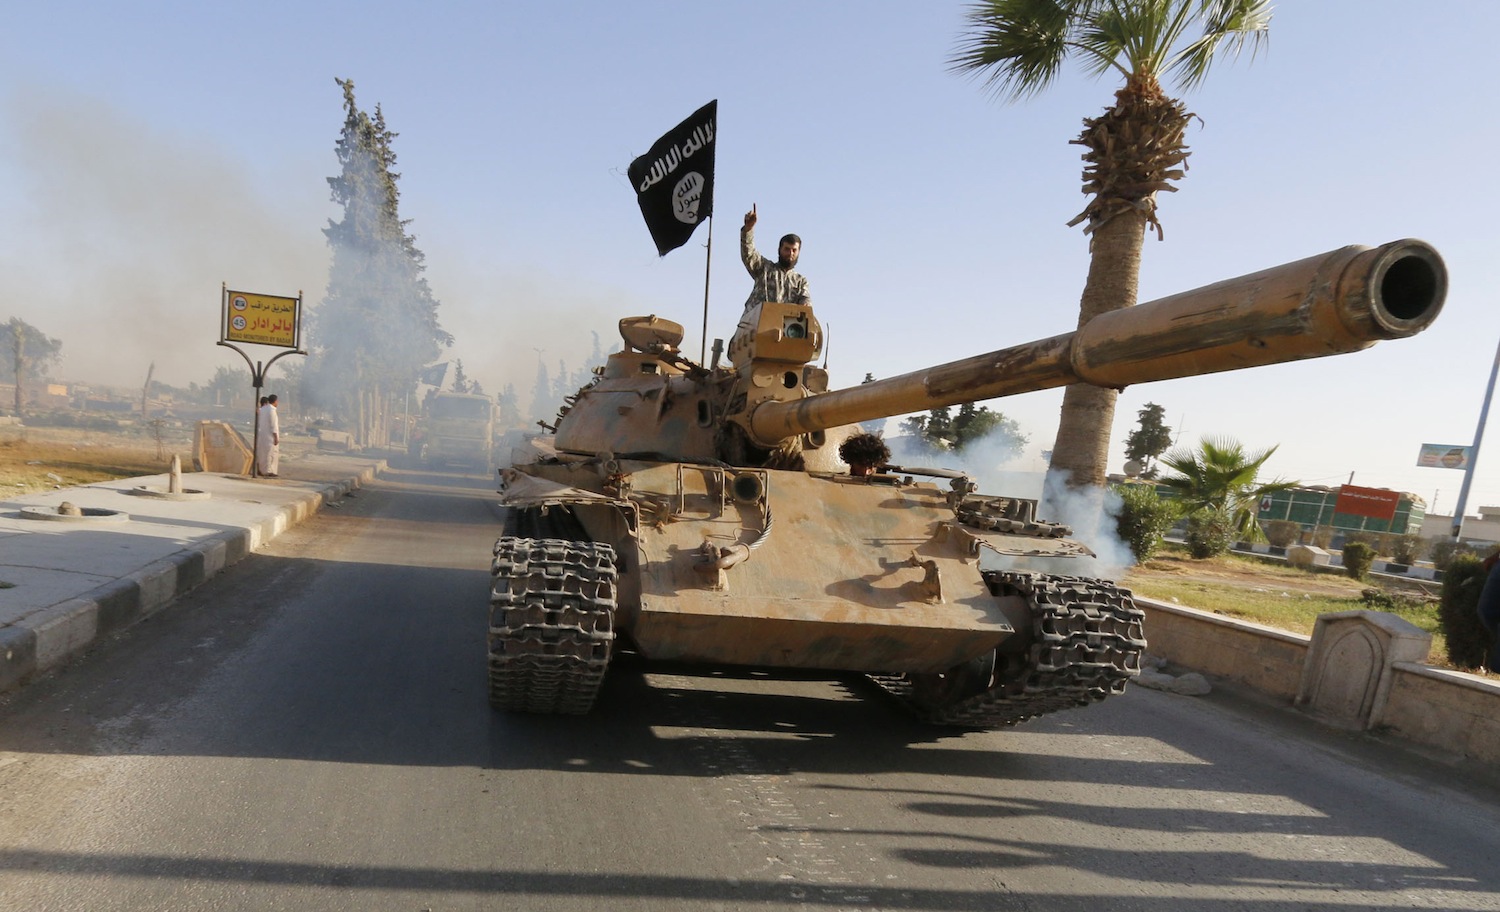 How ‘Islamic’ Is the Islamic State?